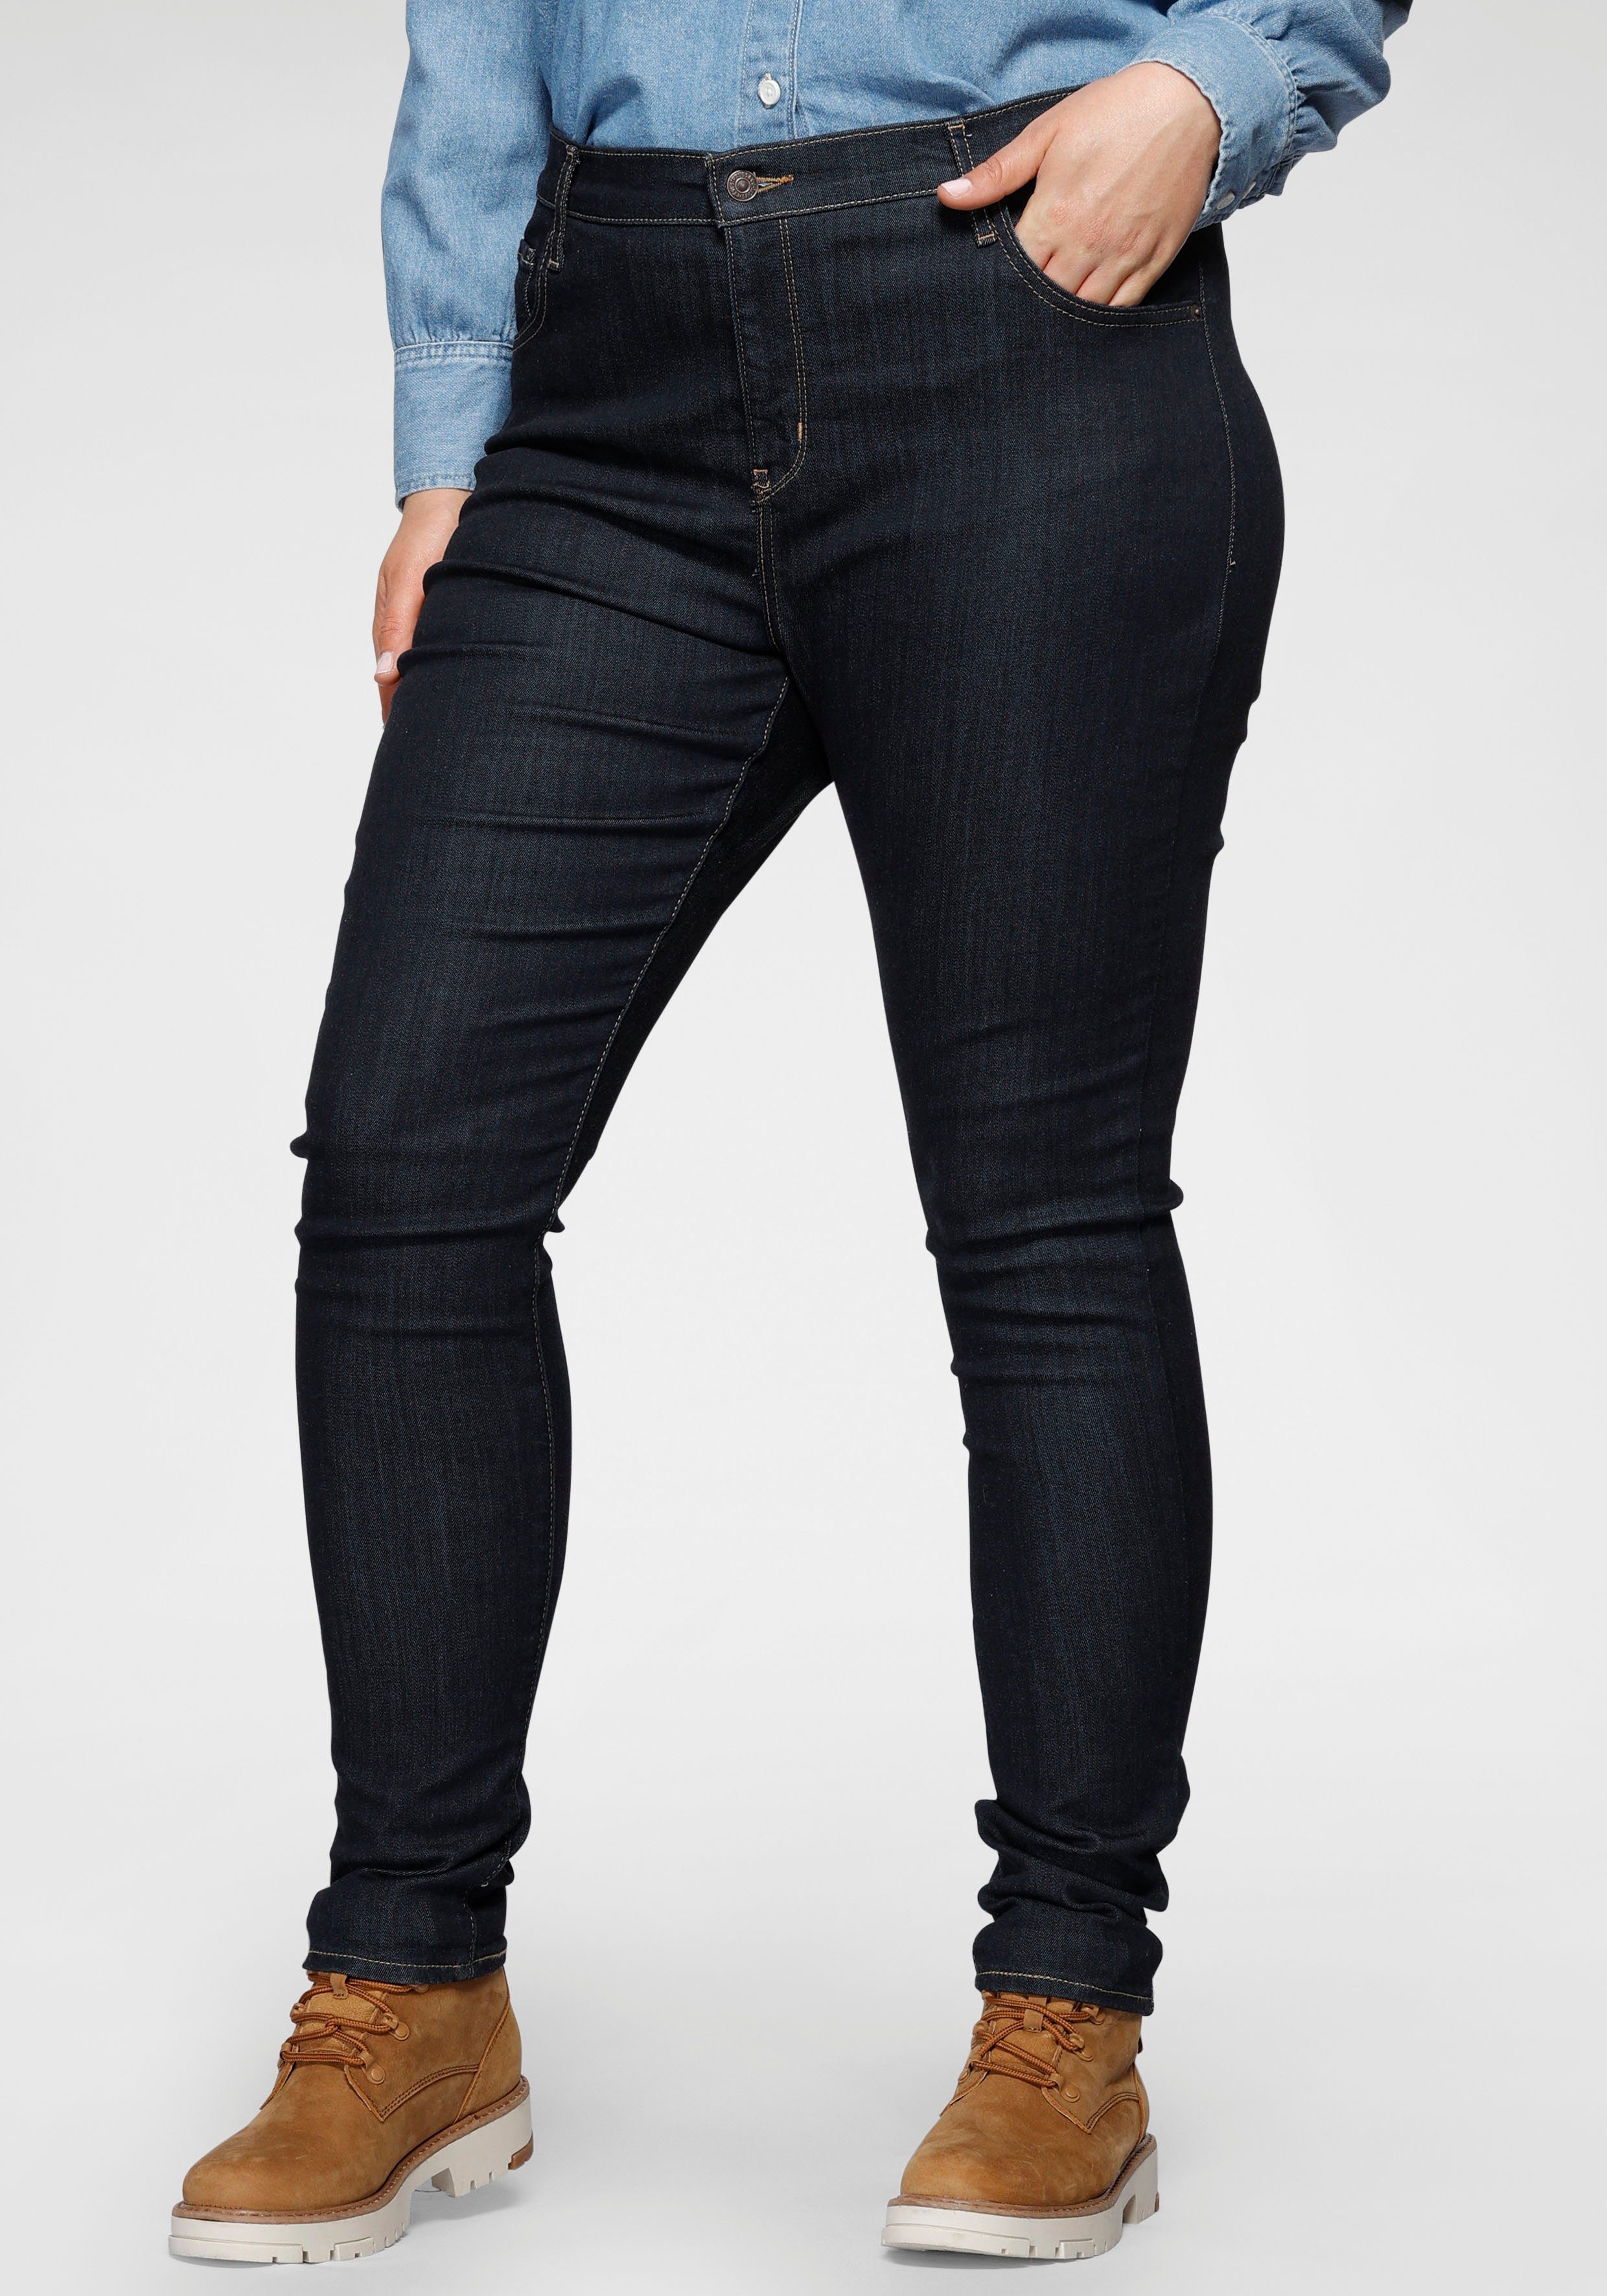 RISE rinsed Schnitt Skinny-fit-Jeans figurbetonter 721 HI Levi's® SKINNY PL Plus sehr